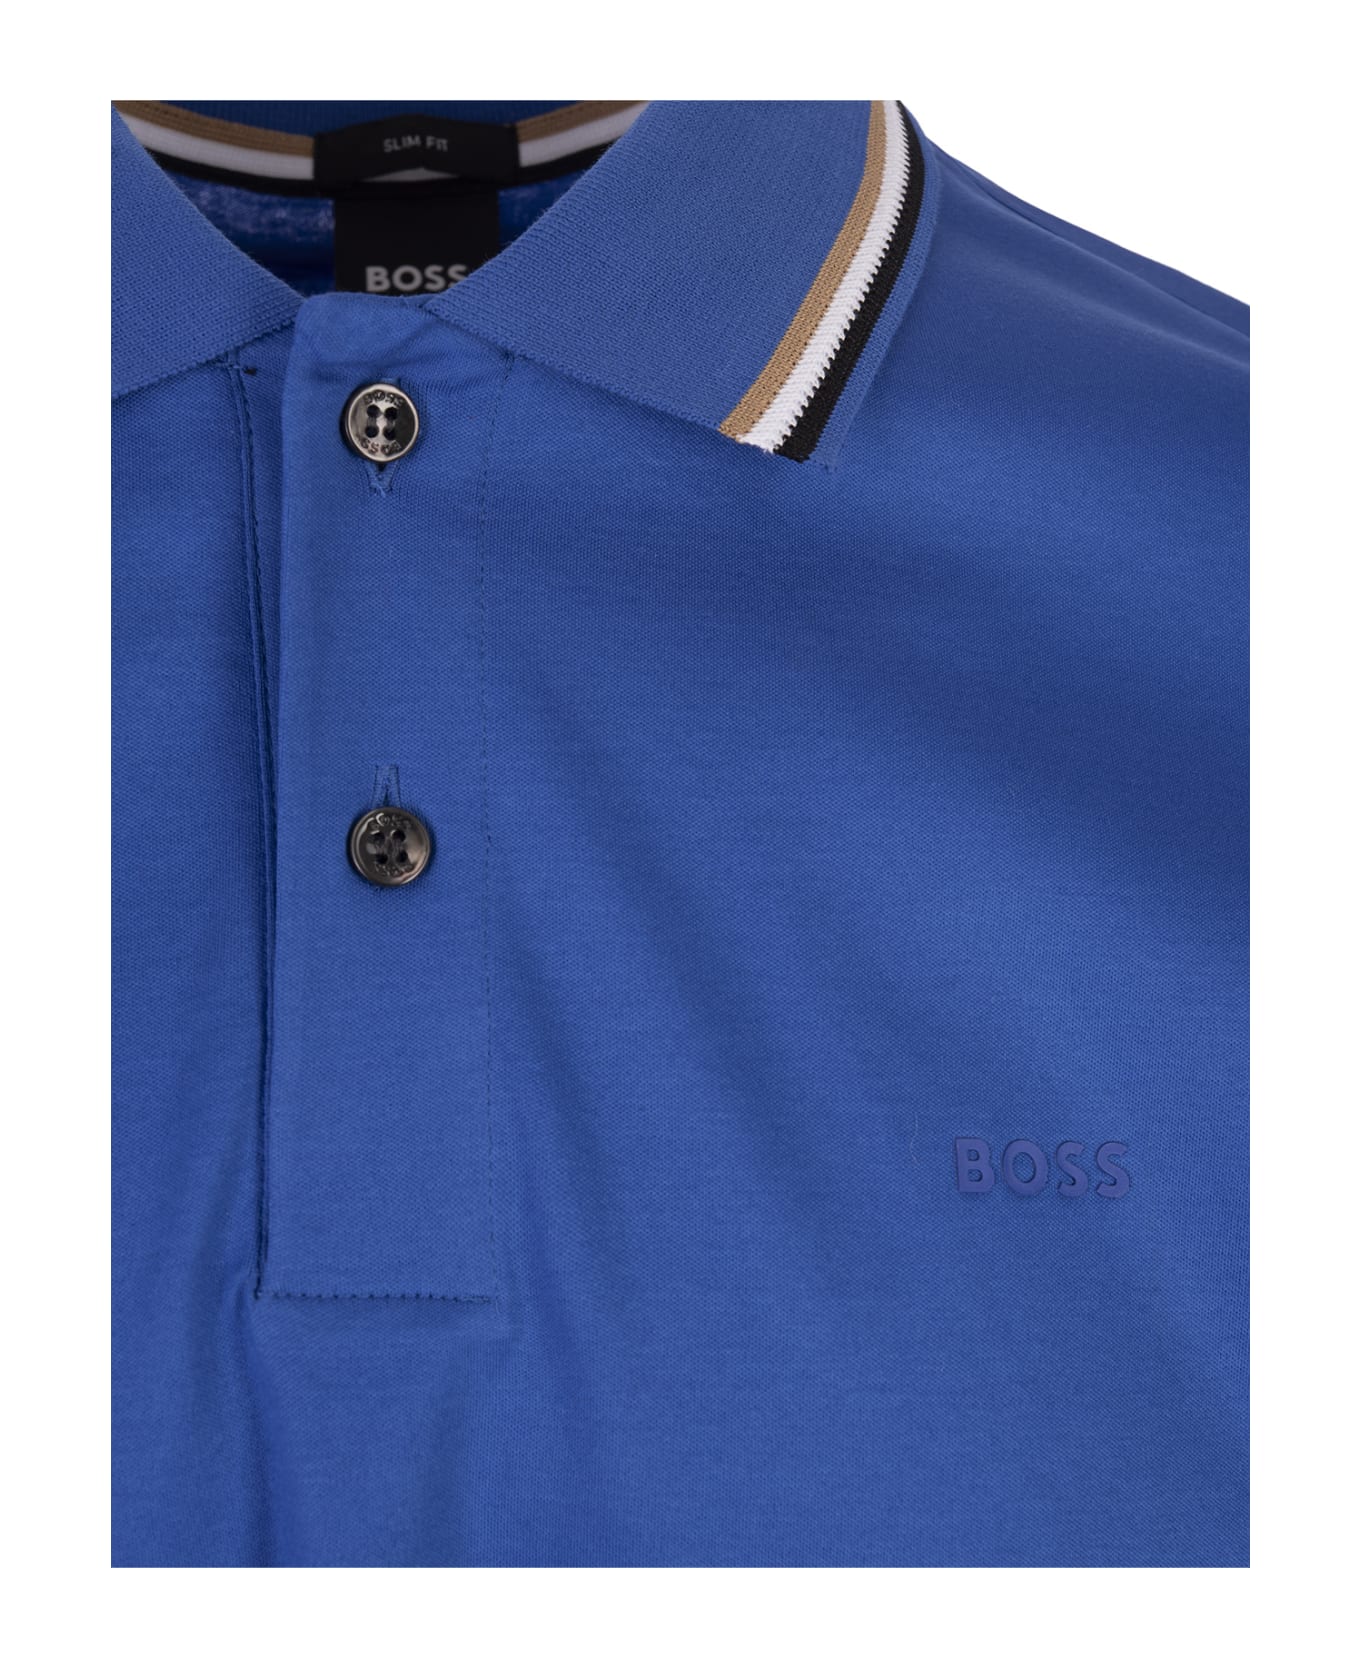 Hugo Boss Royal Blue Slim Fit Polo Shirt With Striped Collar - Blue